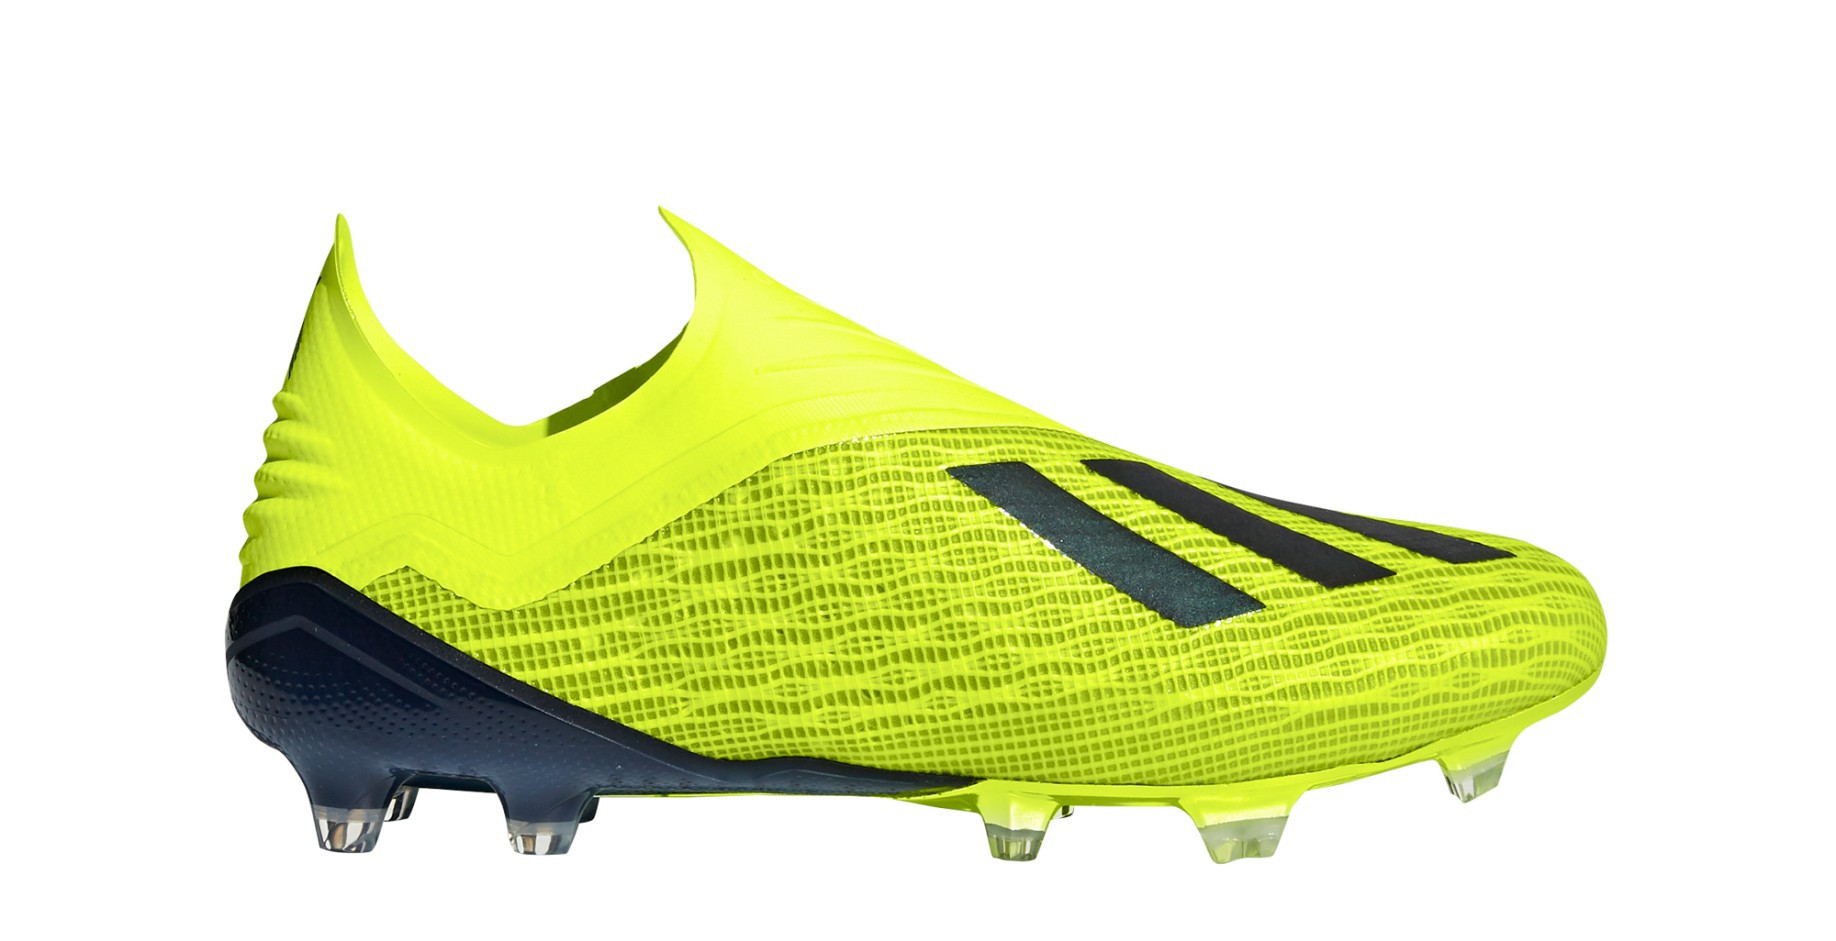 Botas de fútbol Adidas X 18+ FG Equipo de Modo de Pack colore - Adidas -